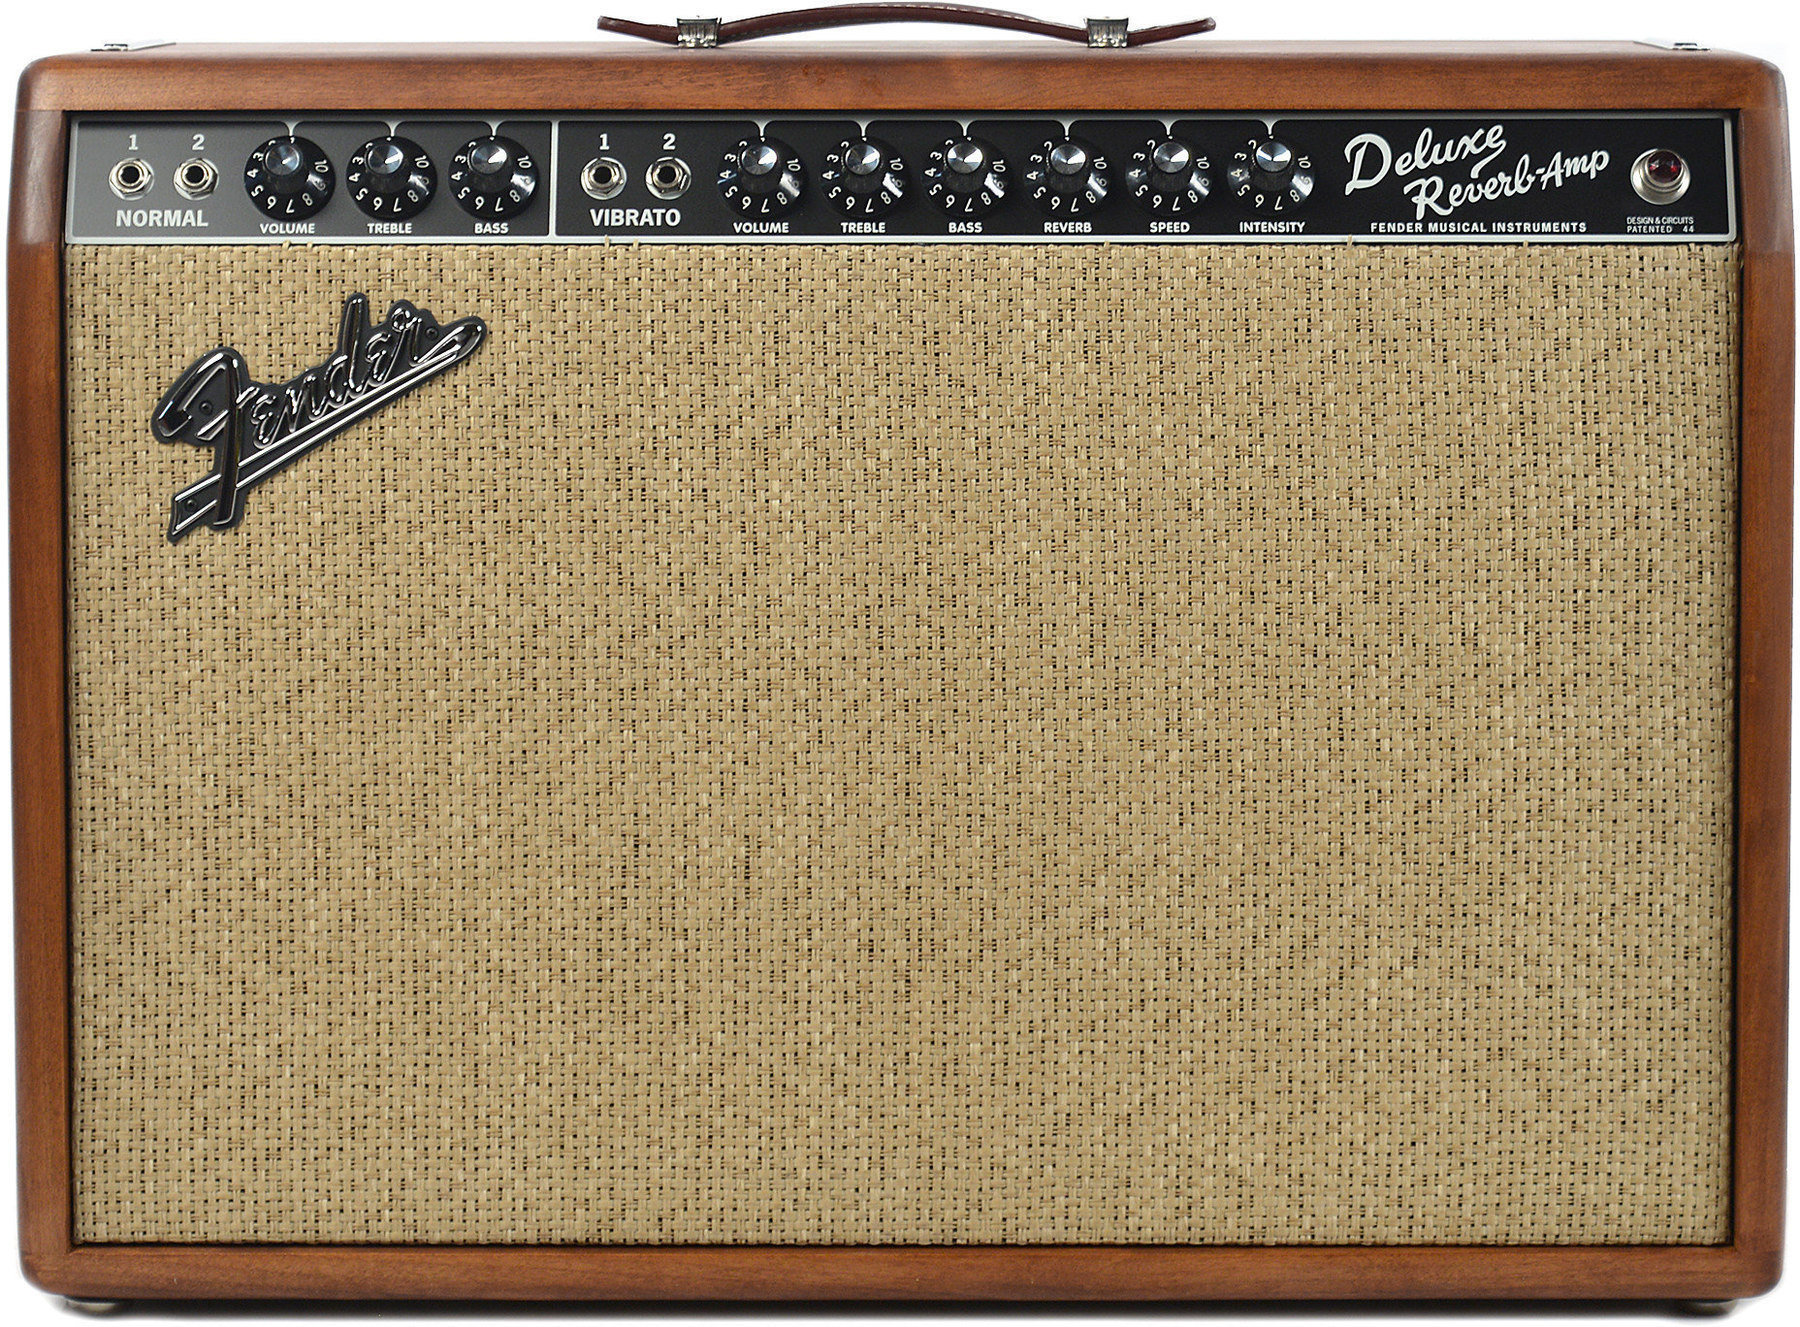 Combo gitarowe lampowe Fender 65 Deluxe Reverb Knotty Pine